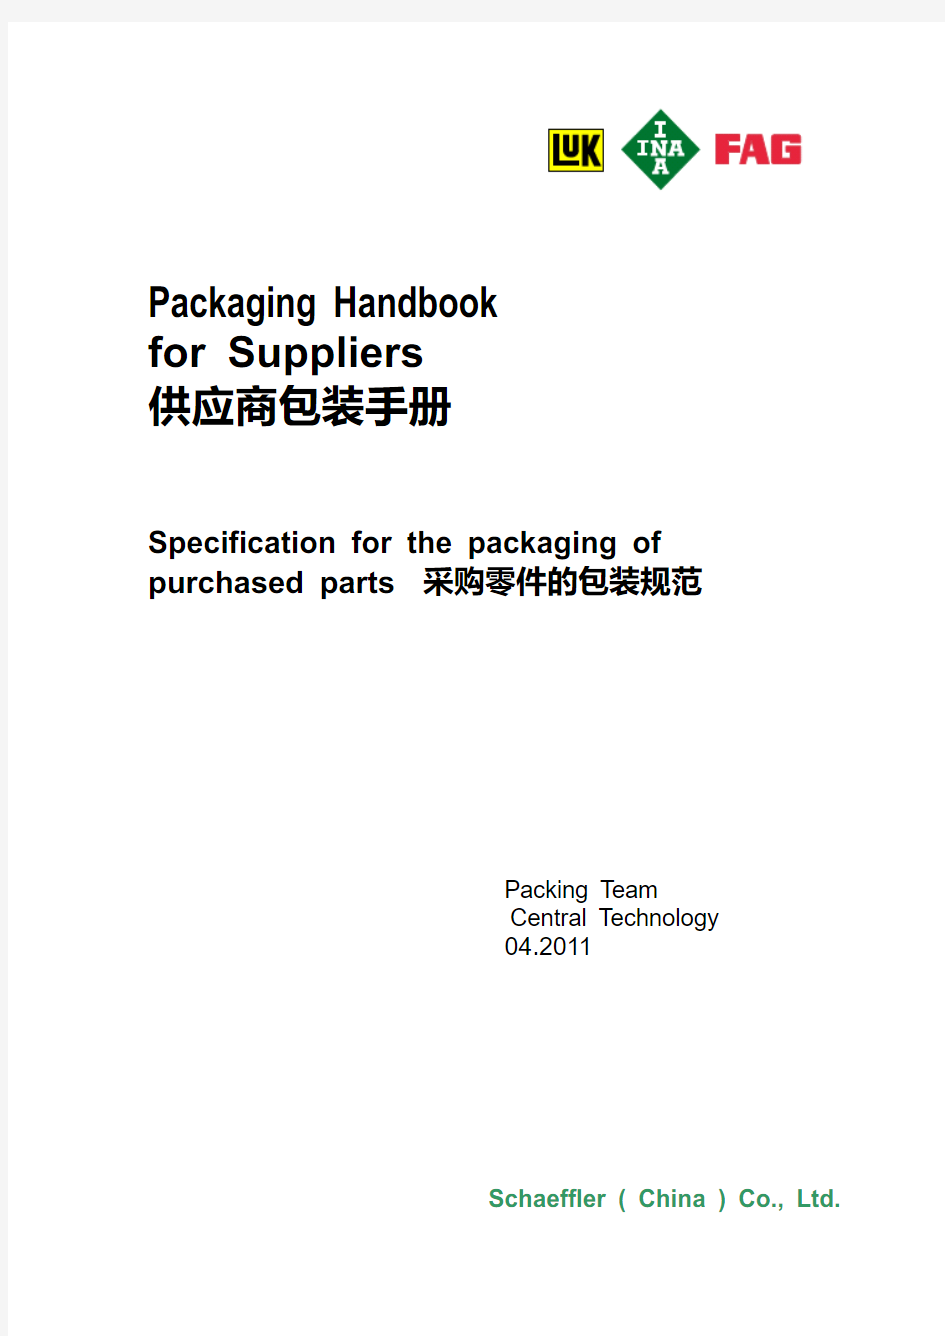 Packaging Handbook for Suppliers